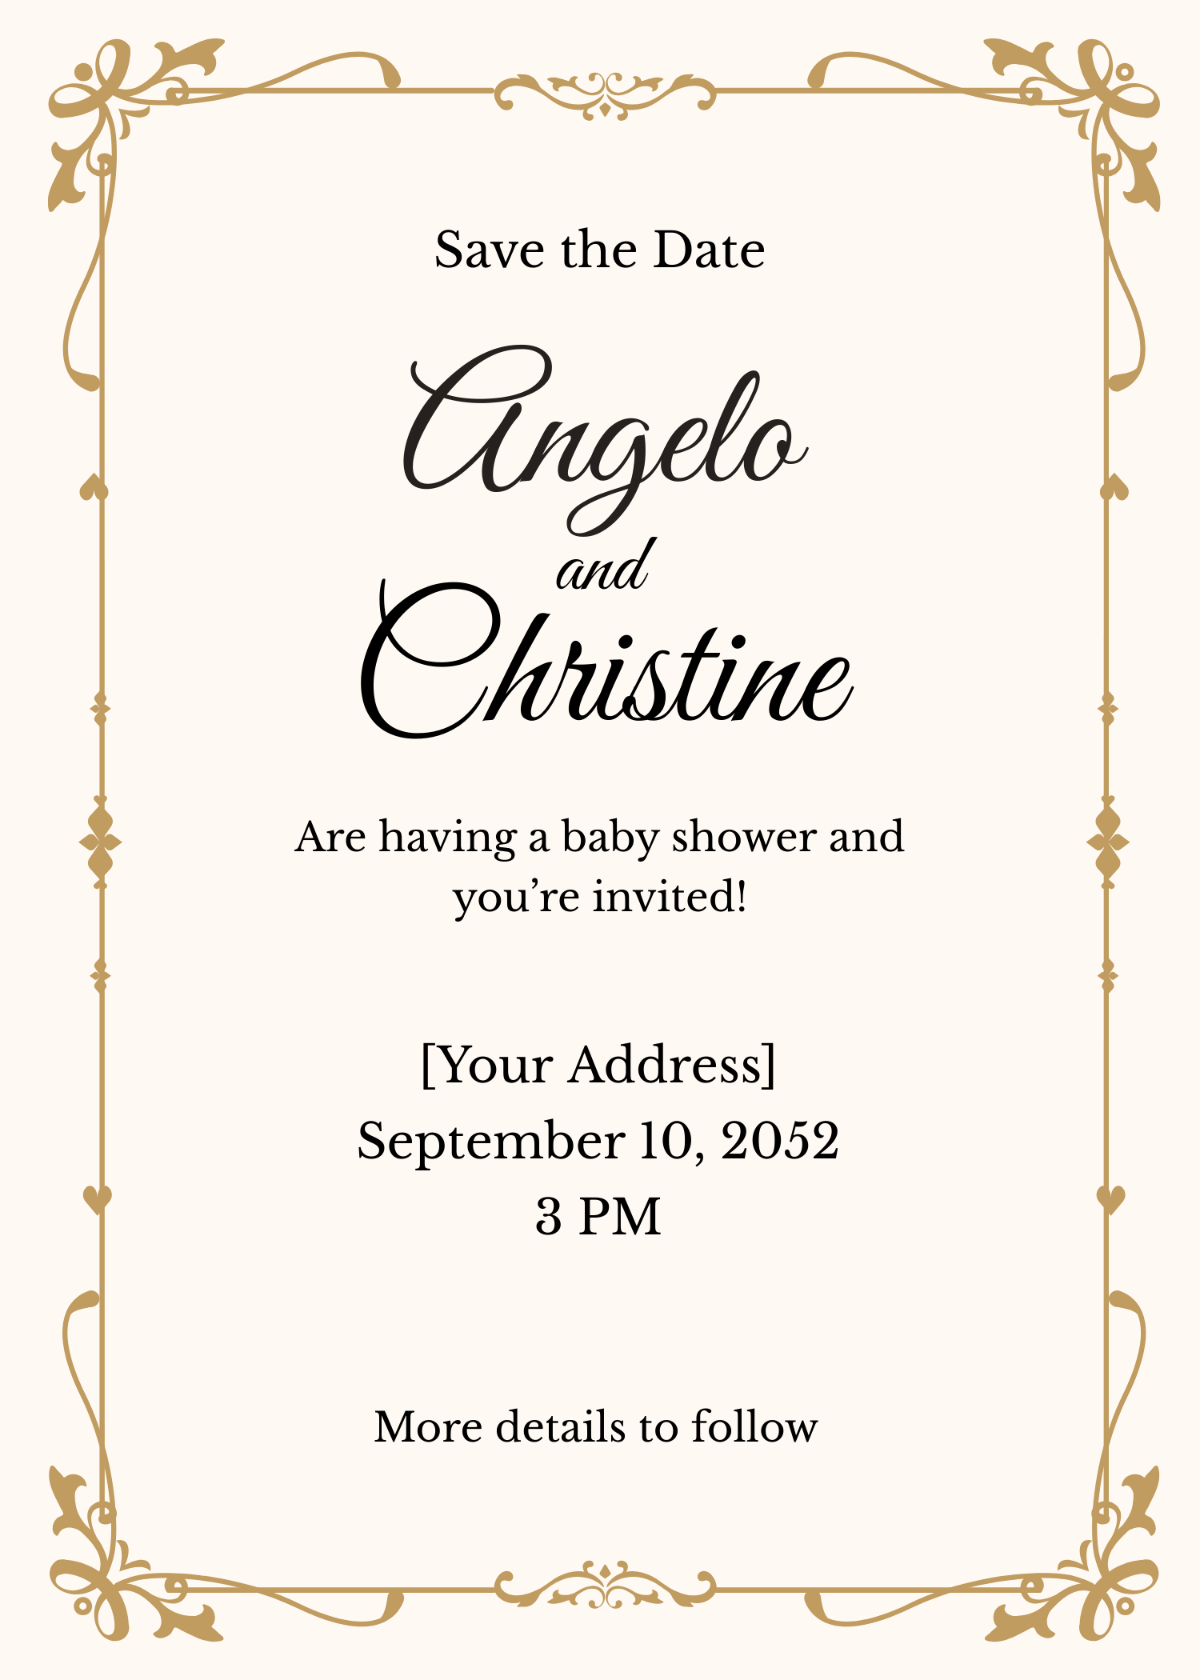 Save the Date Classic Invitation